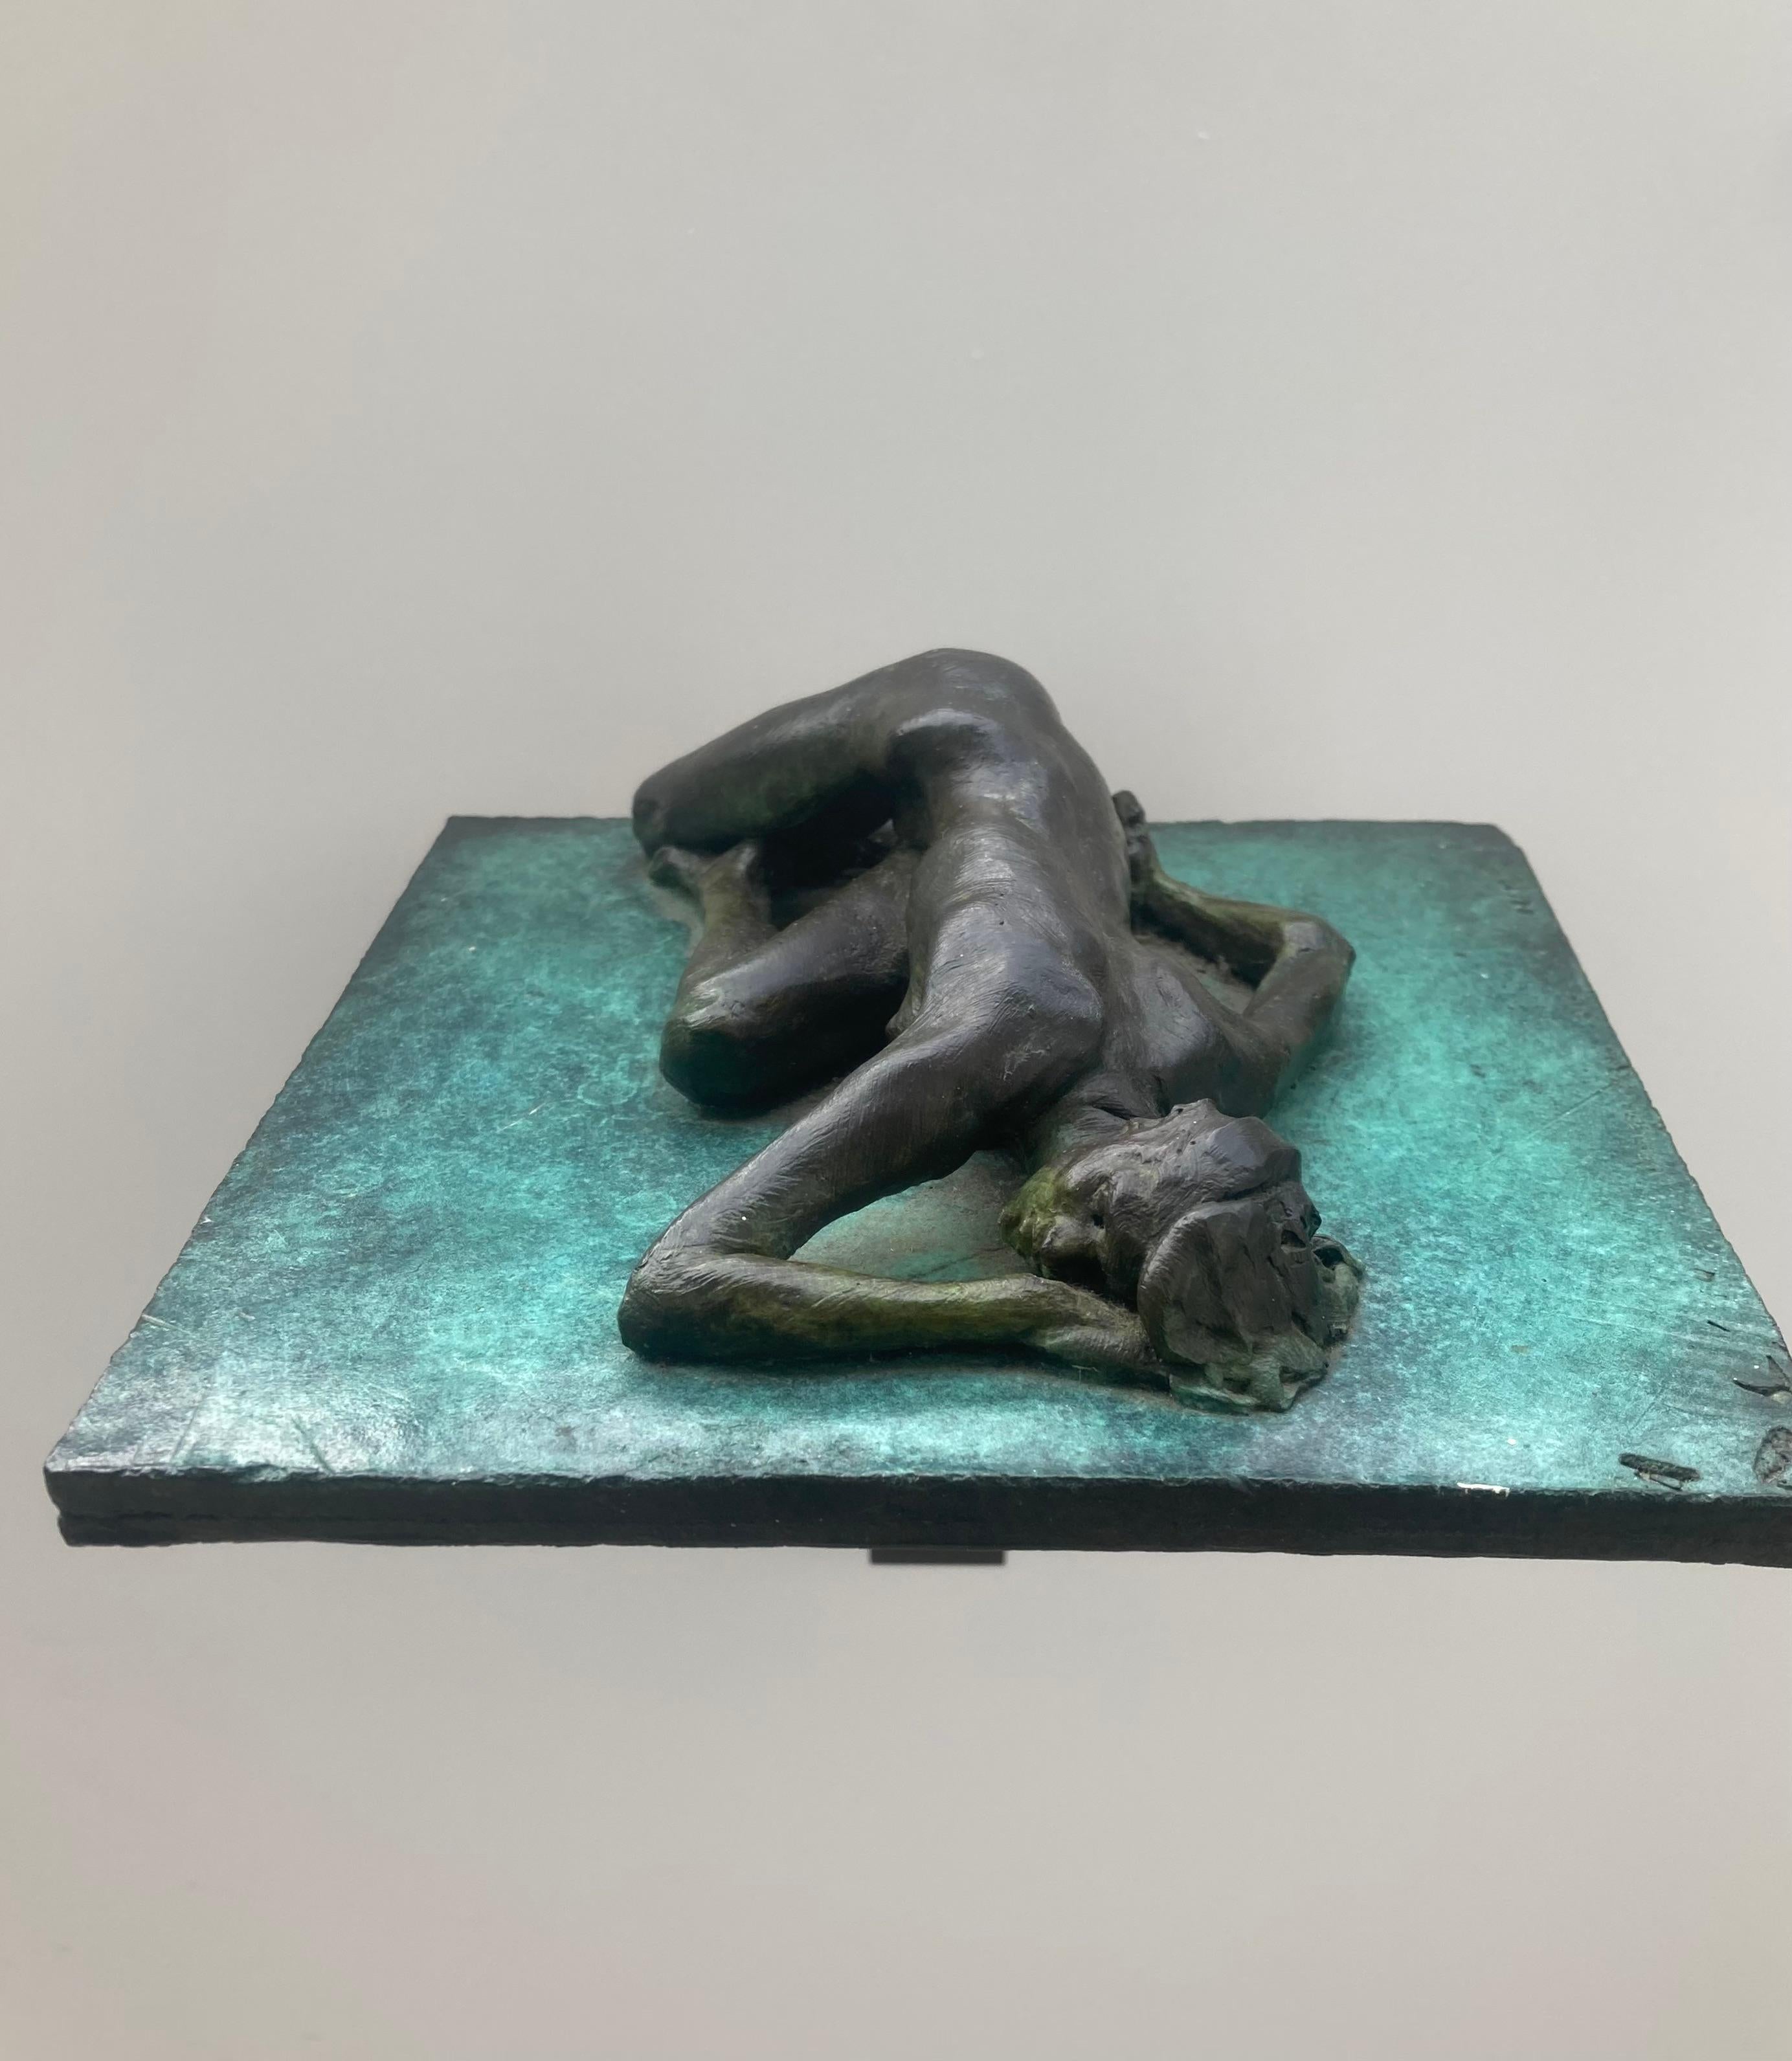 Sculpture de nu en bronze de Robert Graham, / mur/table TitreJennifer4/10,1996.RG en vente 4